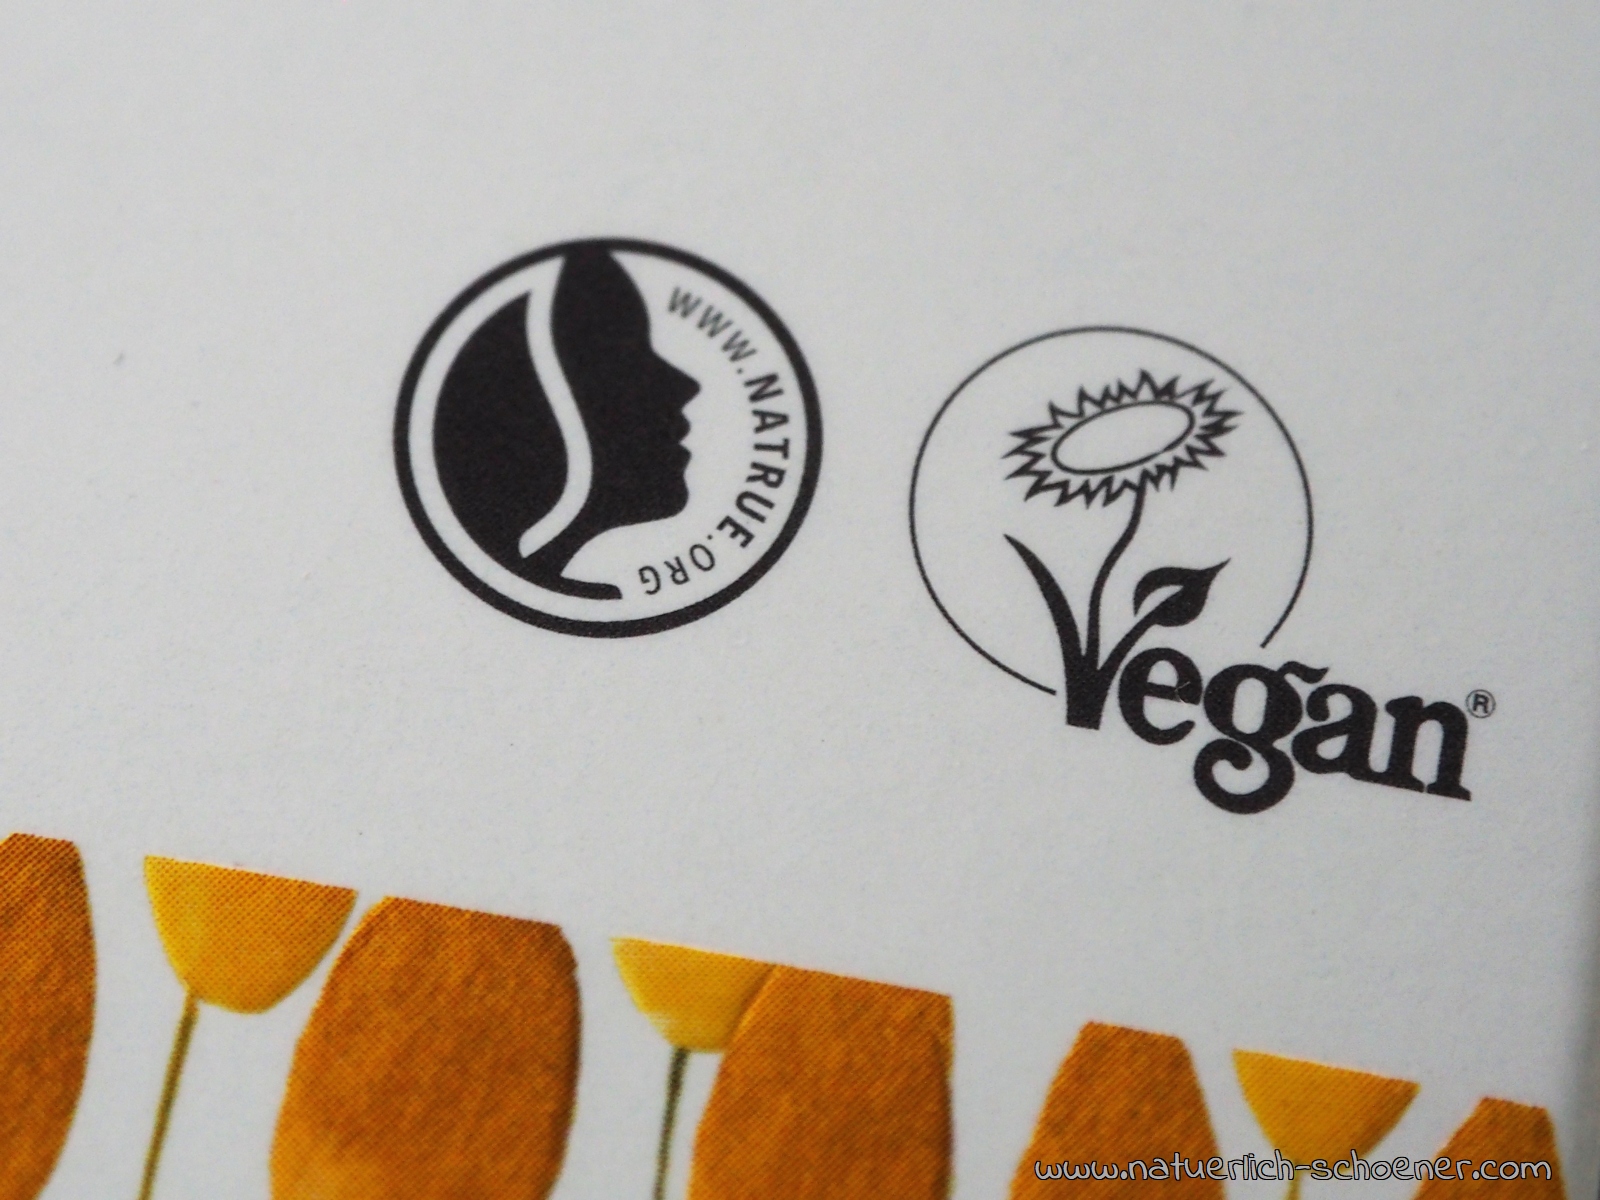 Vegan Siegel Label 